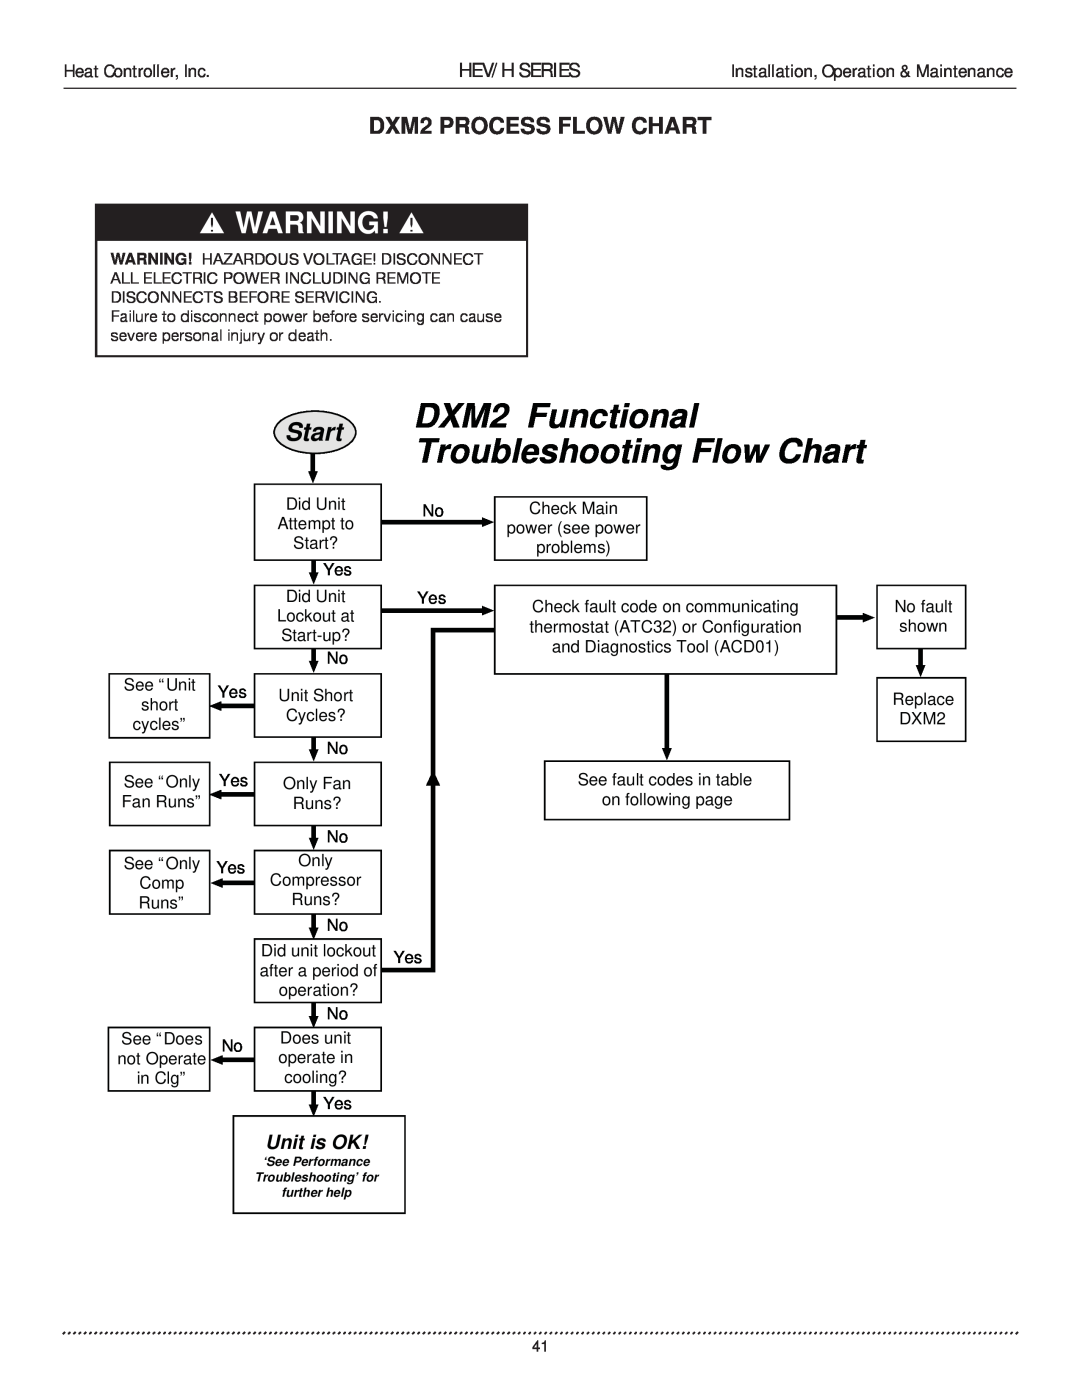 Heat Controller HEV/H DXM2 PROCESS FLOW CHART, DXM2 Functional Troubleshooting Flow Chart, Start, Hev/H Series, Unit is OK 